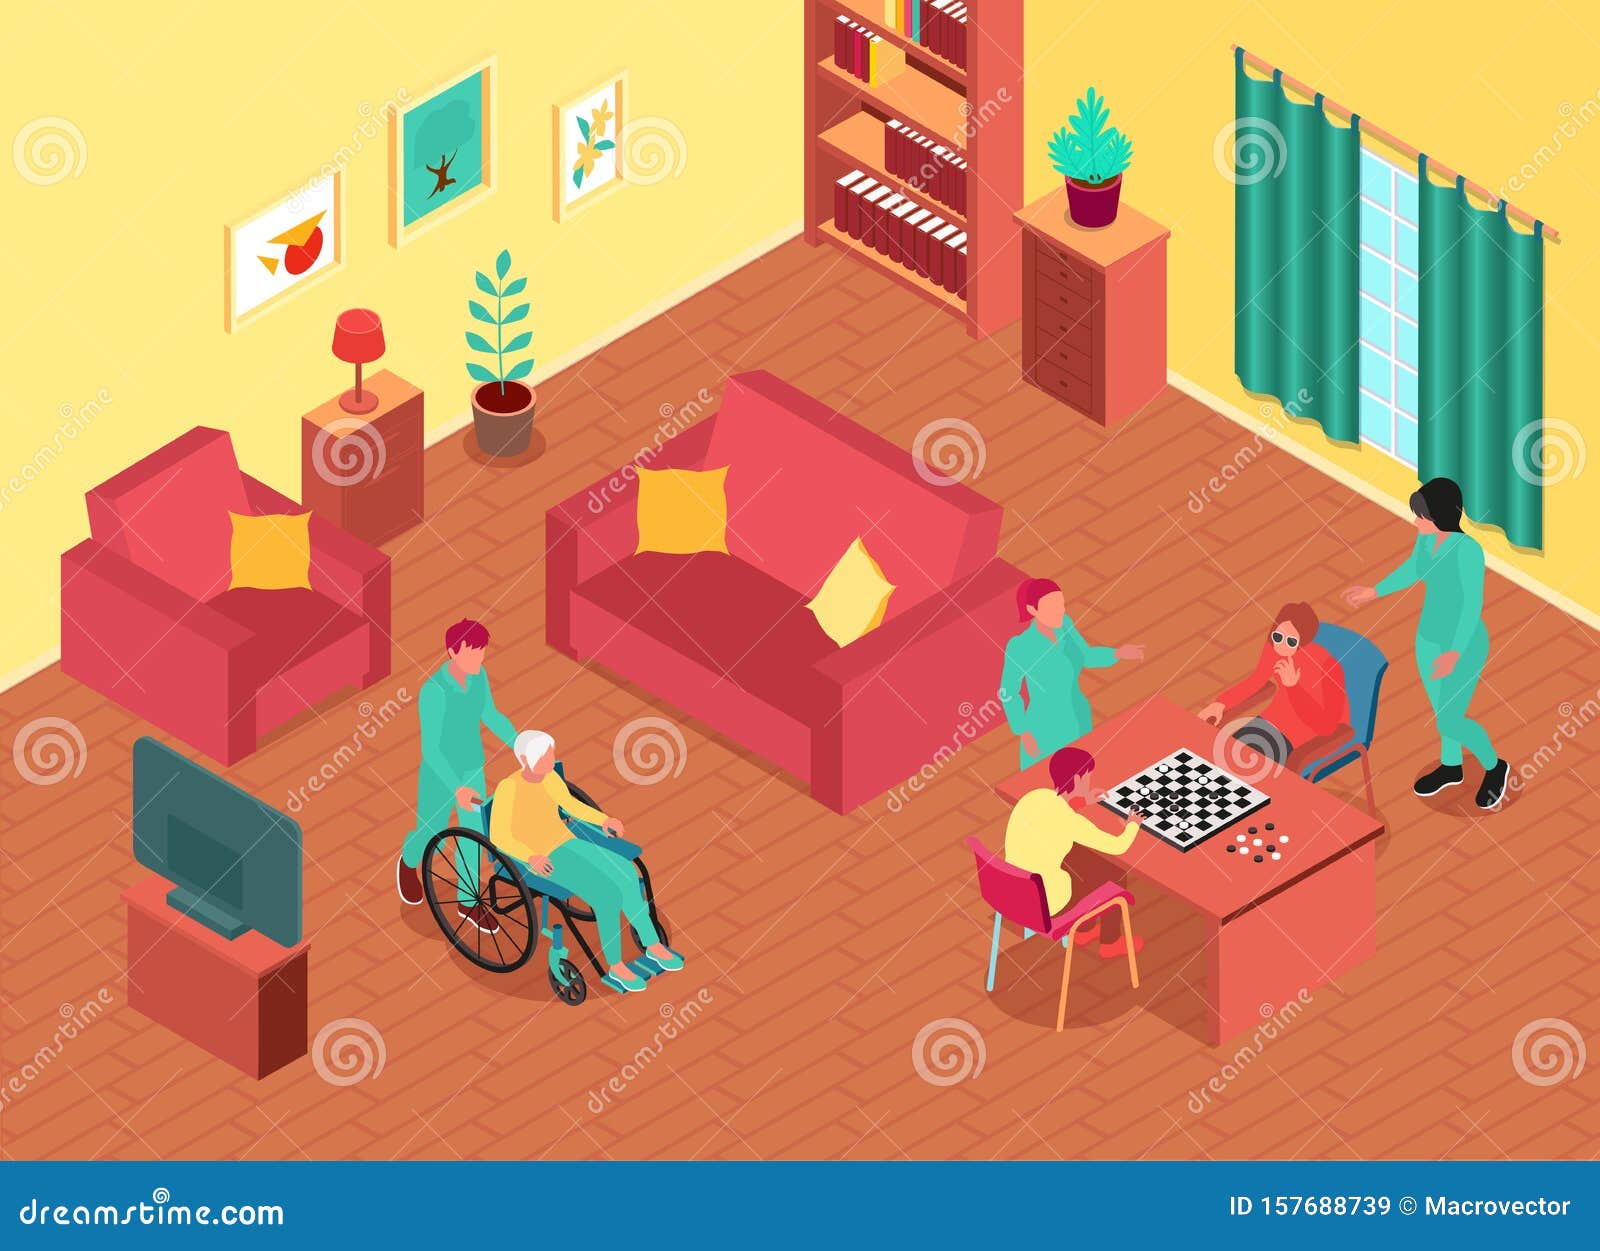 Download Nursing Home Illustration stock vector. Illustration of ...